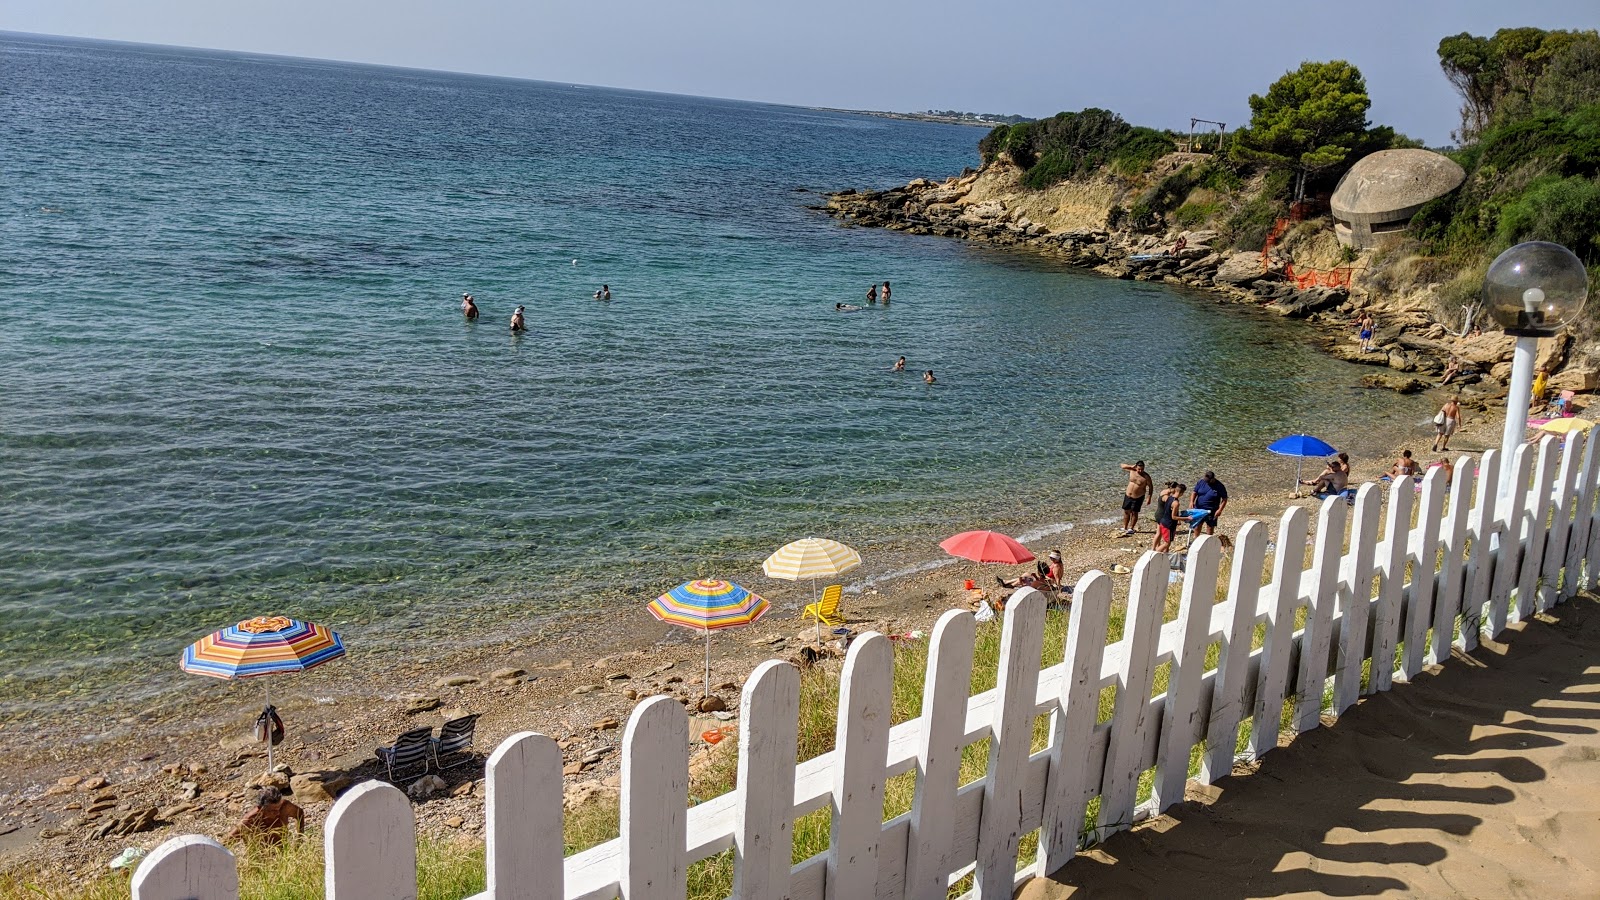 Spiaggia Fanusa'in fotoğrafı turkuaz saf su yüzey ile